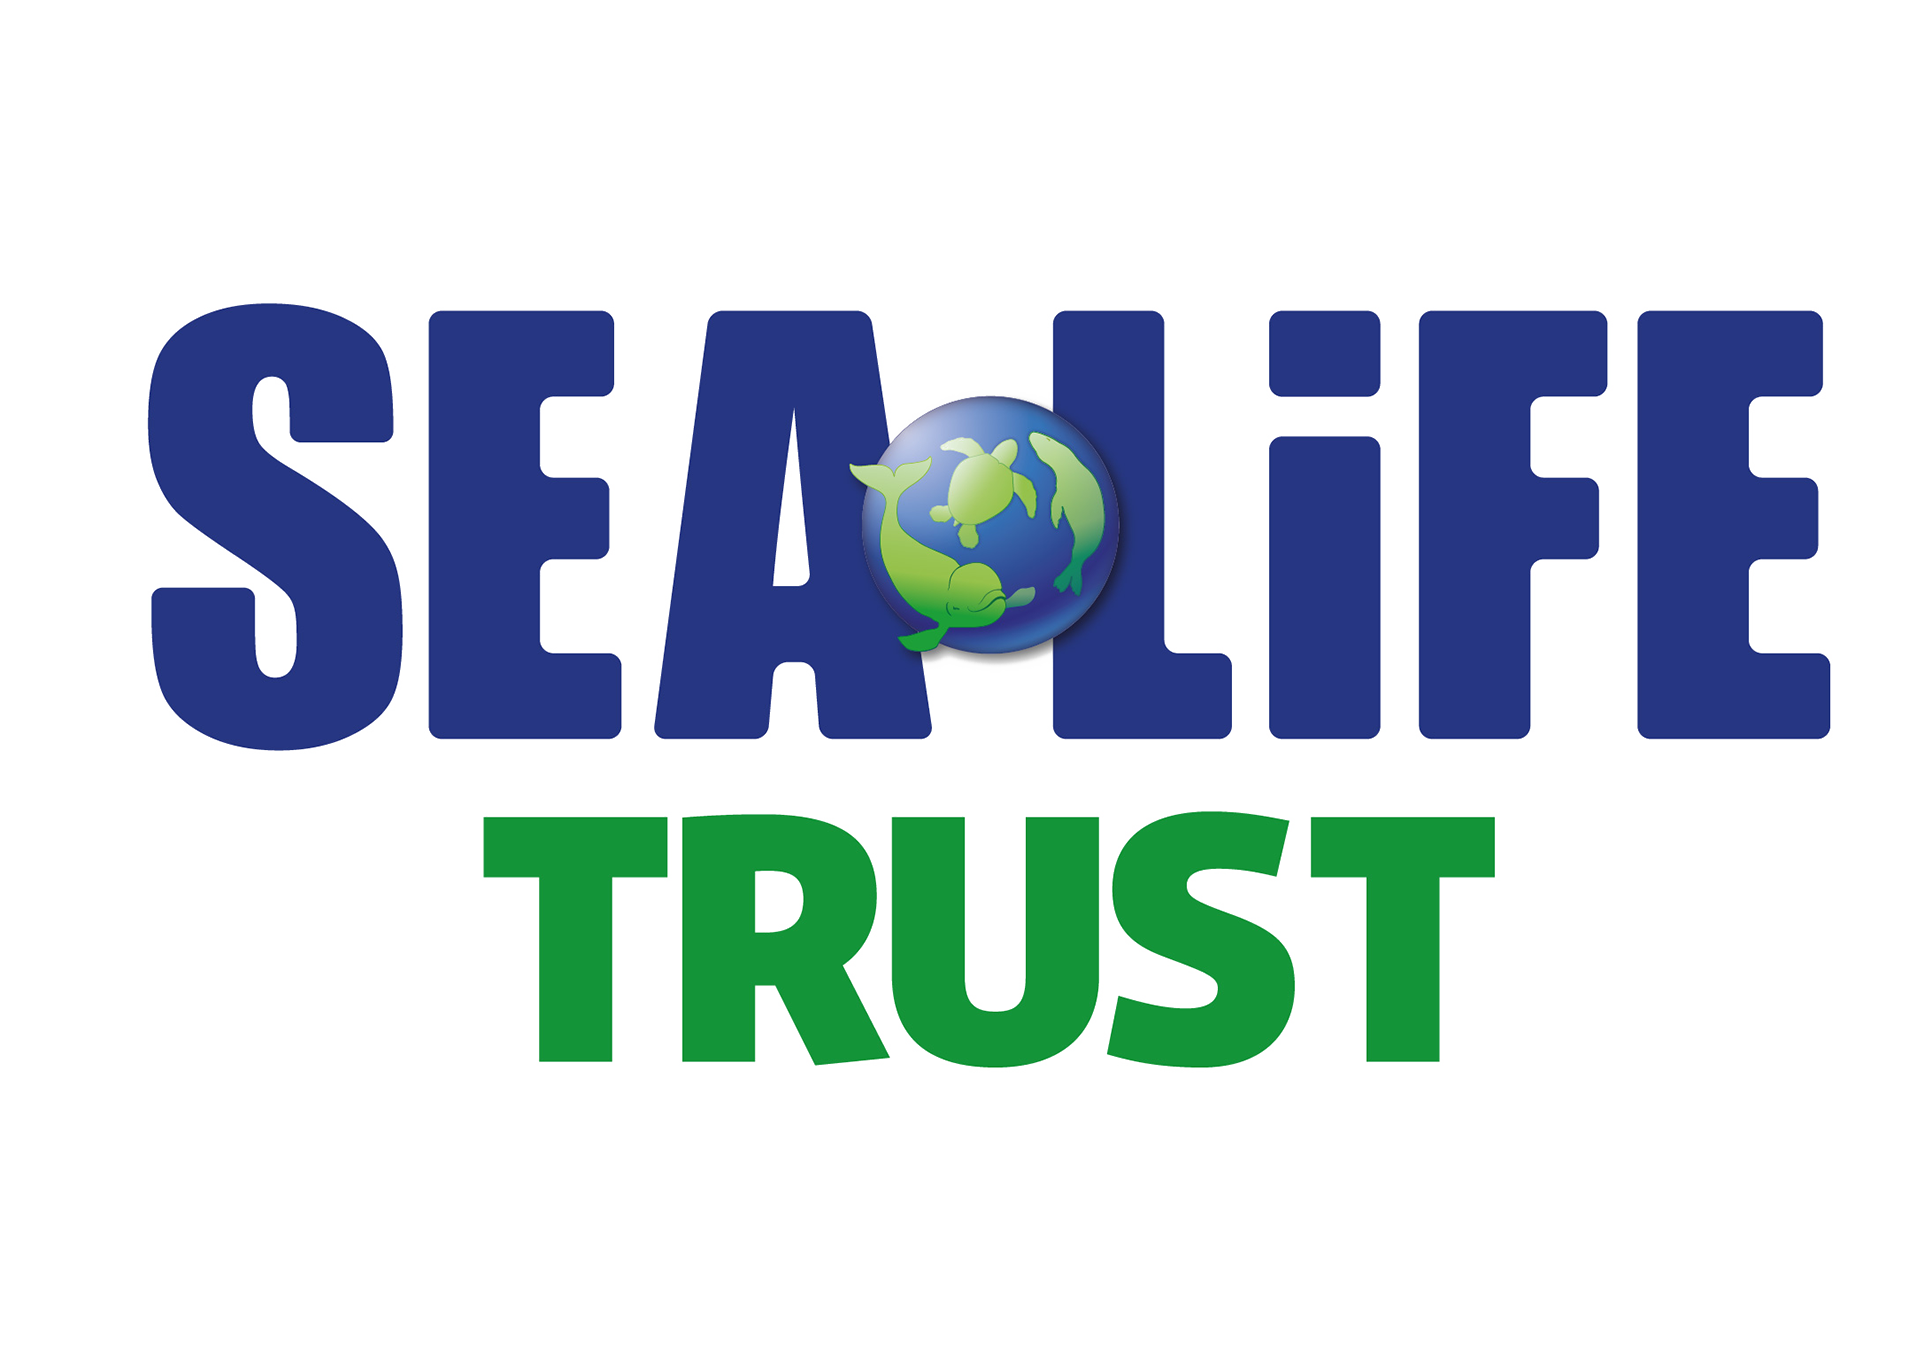 SEA LIFE Trust